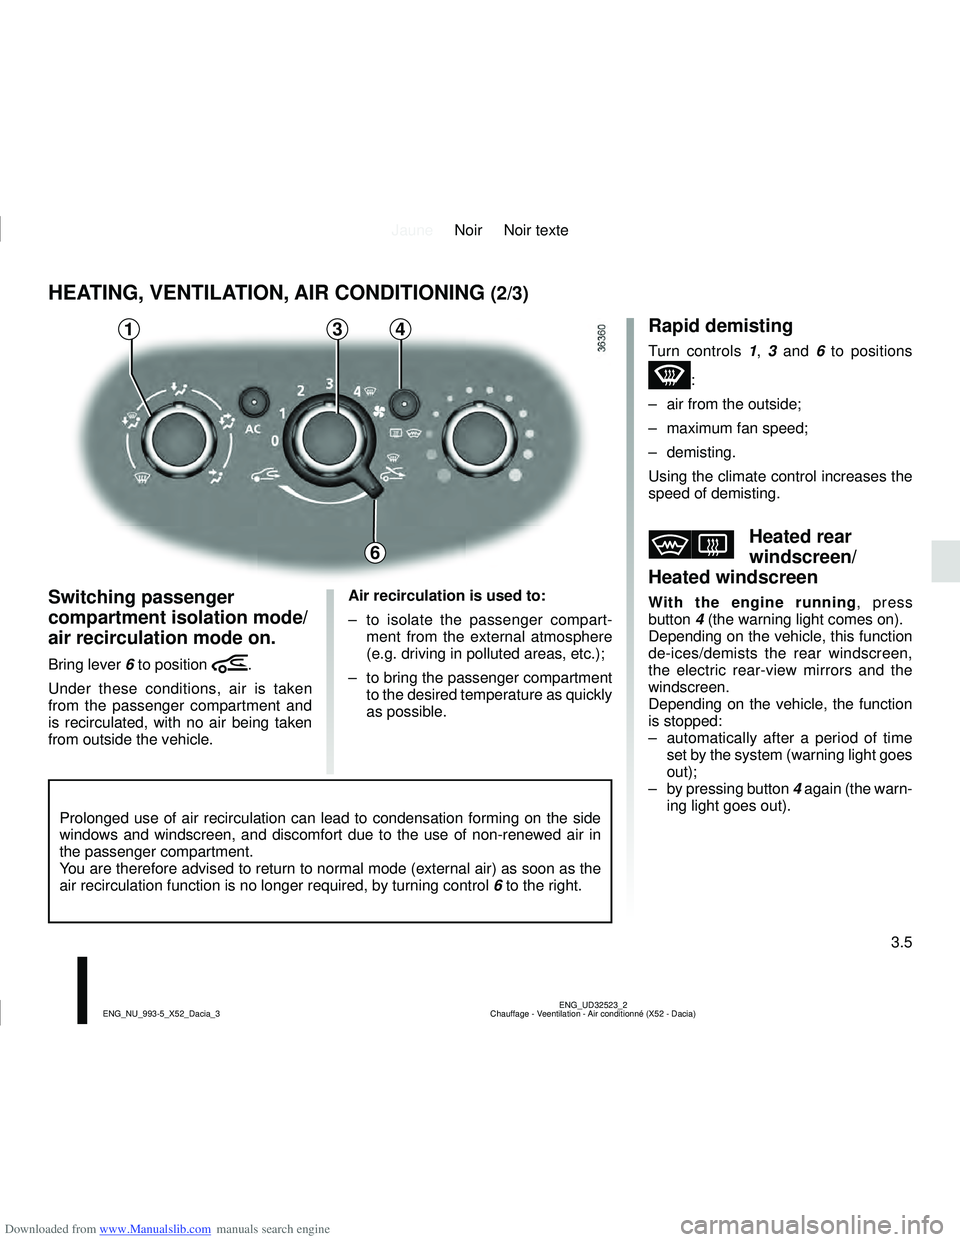 DACIA LOGAN 2015  Owners Manual Downloaded from www.Manualslib.com manuals search engine JauneNoir Noir texte
3.5
ENG_UD32523_2
Chauffage - Veentilation - Air conditionné (X52 - Dacia)
ENG_NU_993-5_X52_Dacia_3
HEATING, VENTILATION,